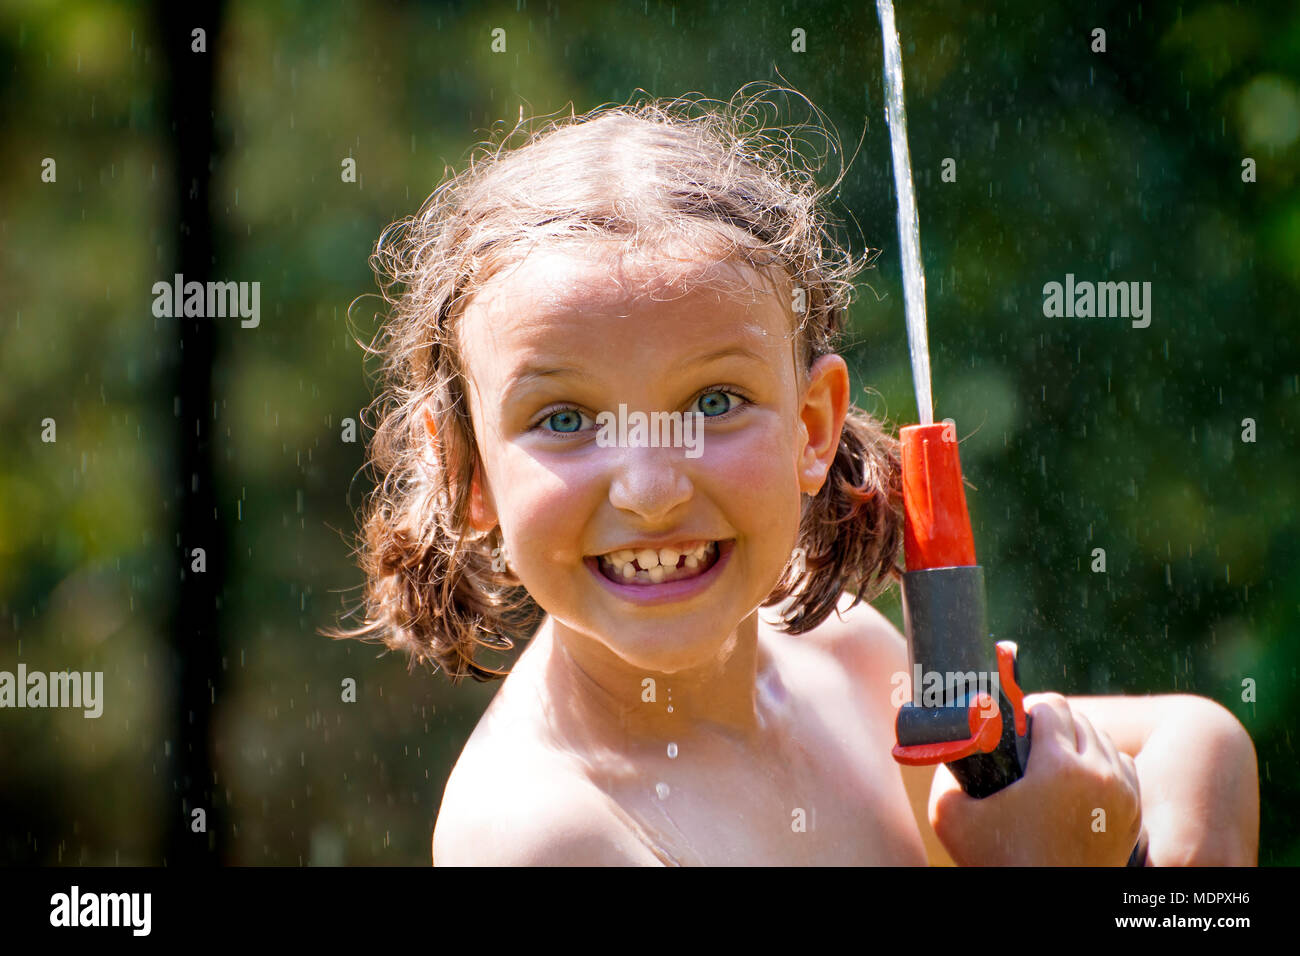 Young Girl Having Fun While Standing Under Garden Sprinkler During Hot